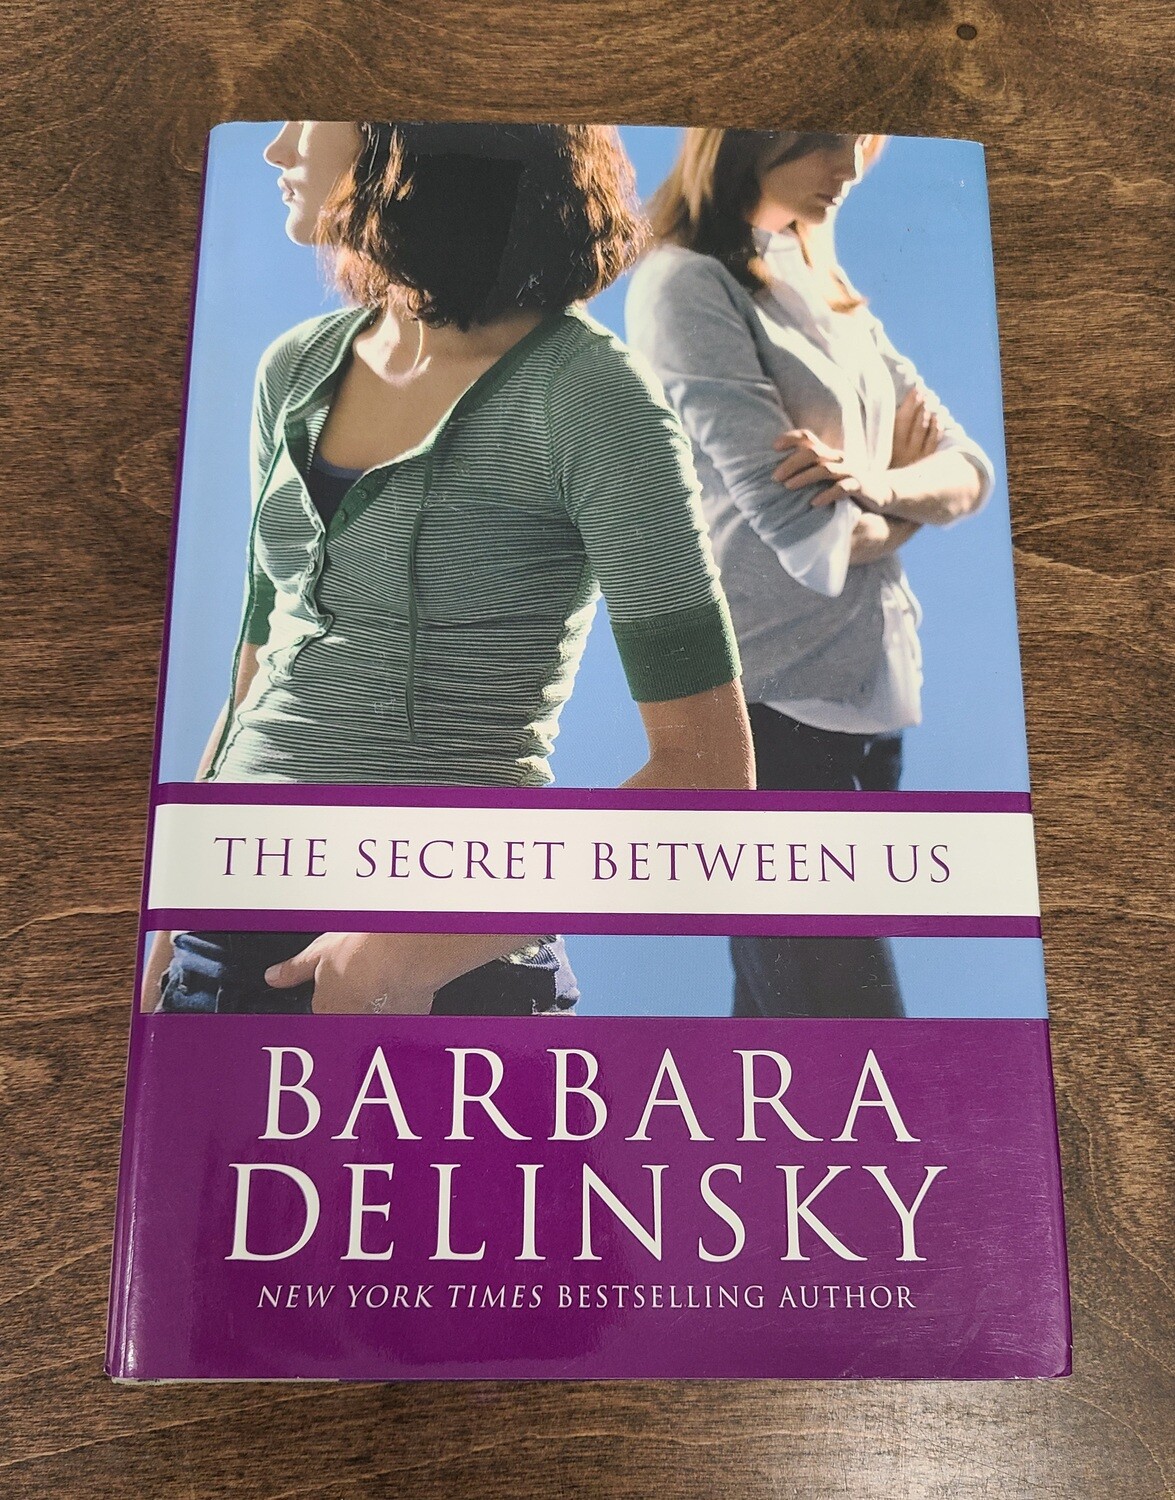 The Secret Between Us by Barbara Delinsky